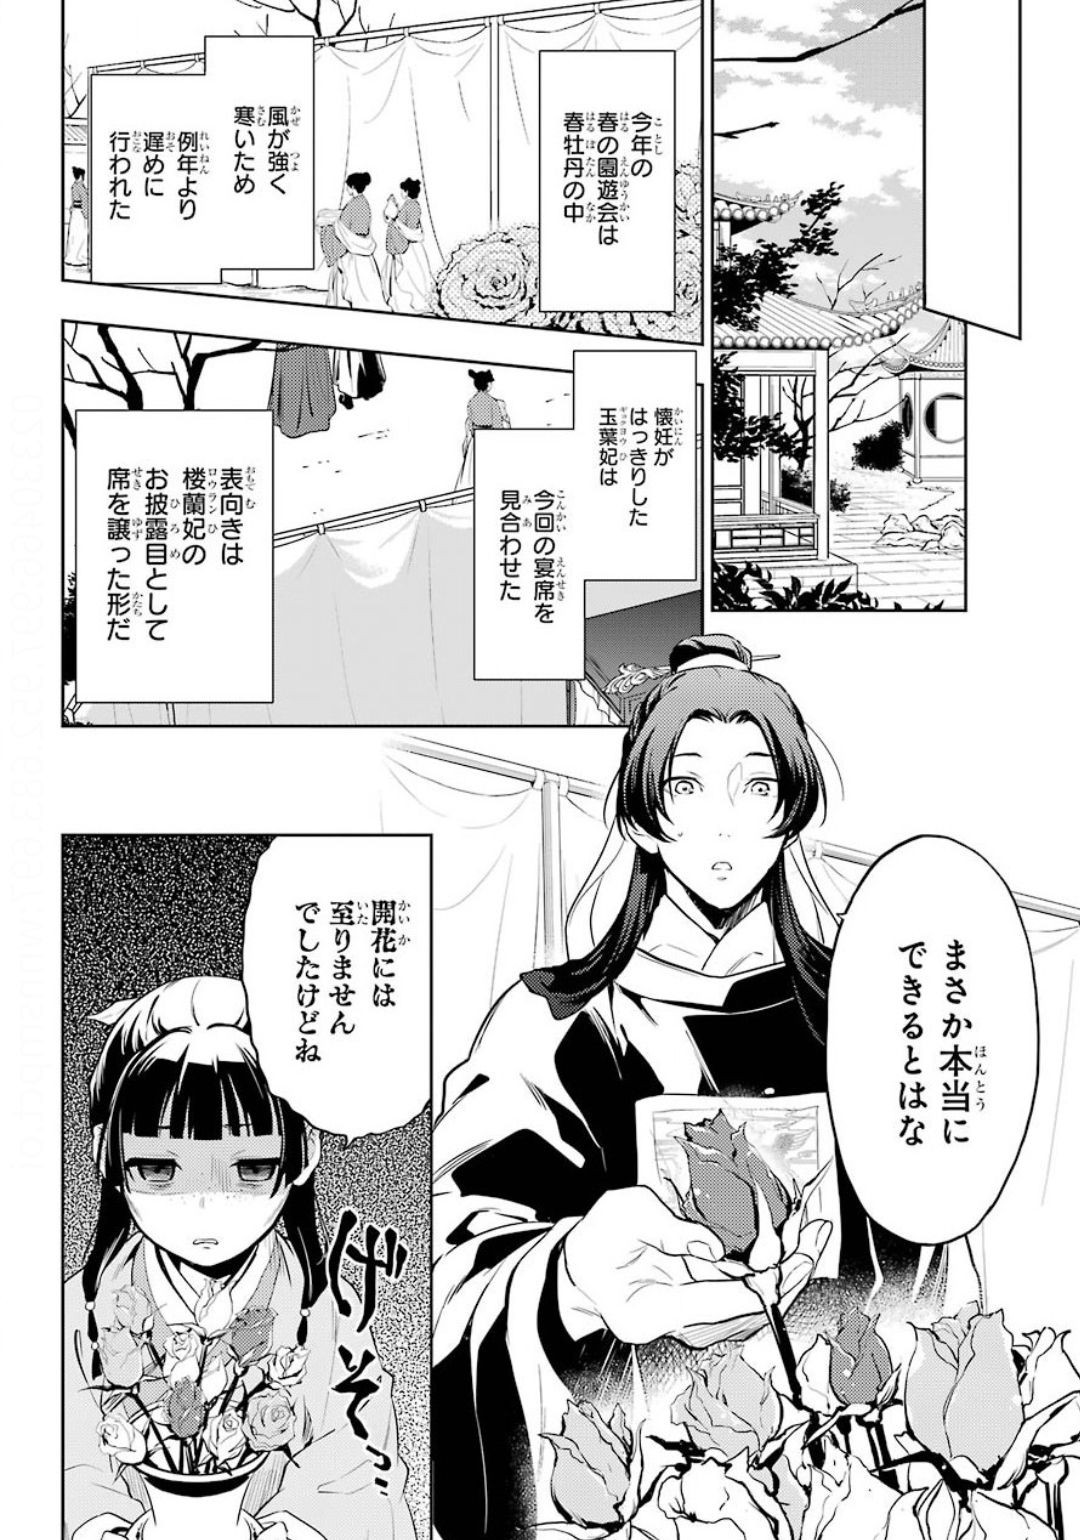 Kusuriya no Hitorigoto - Chapter 36-1 - Page 22